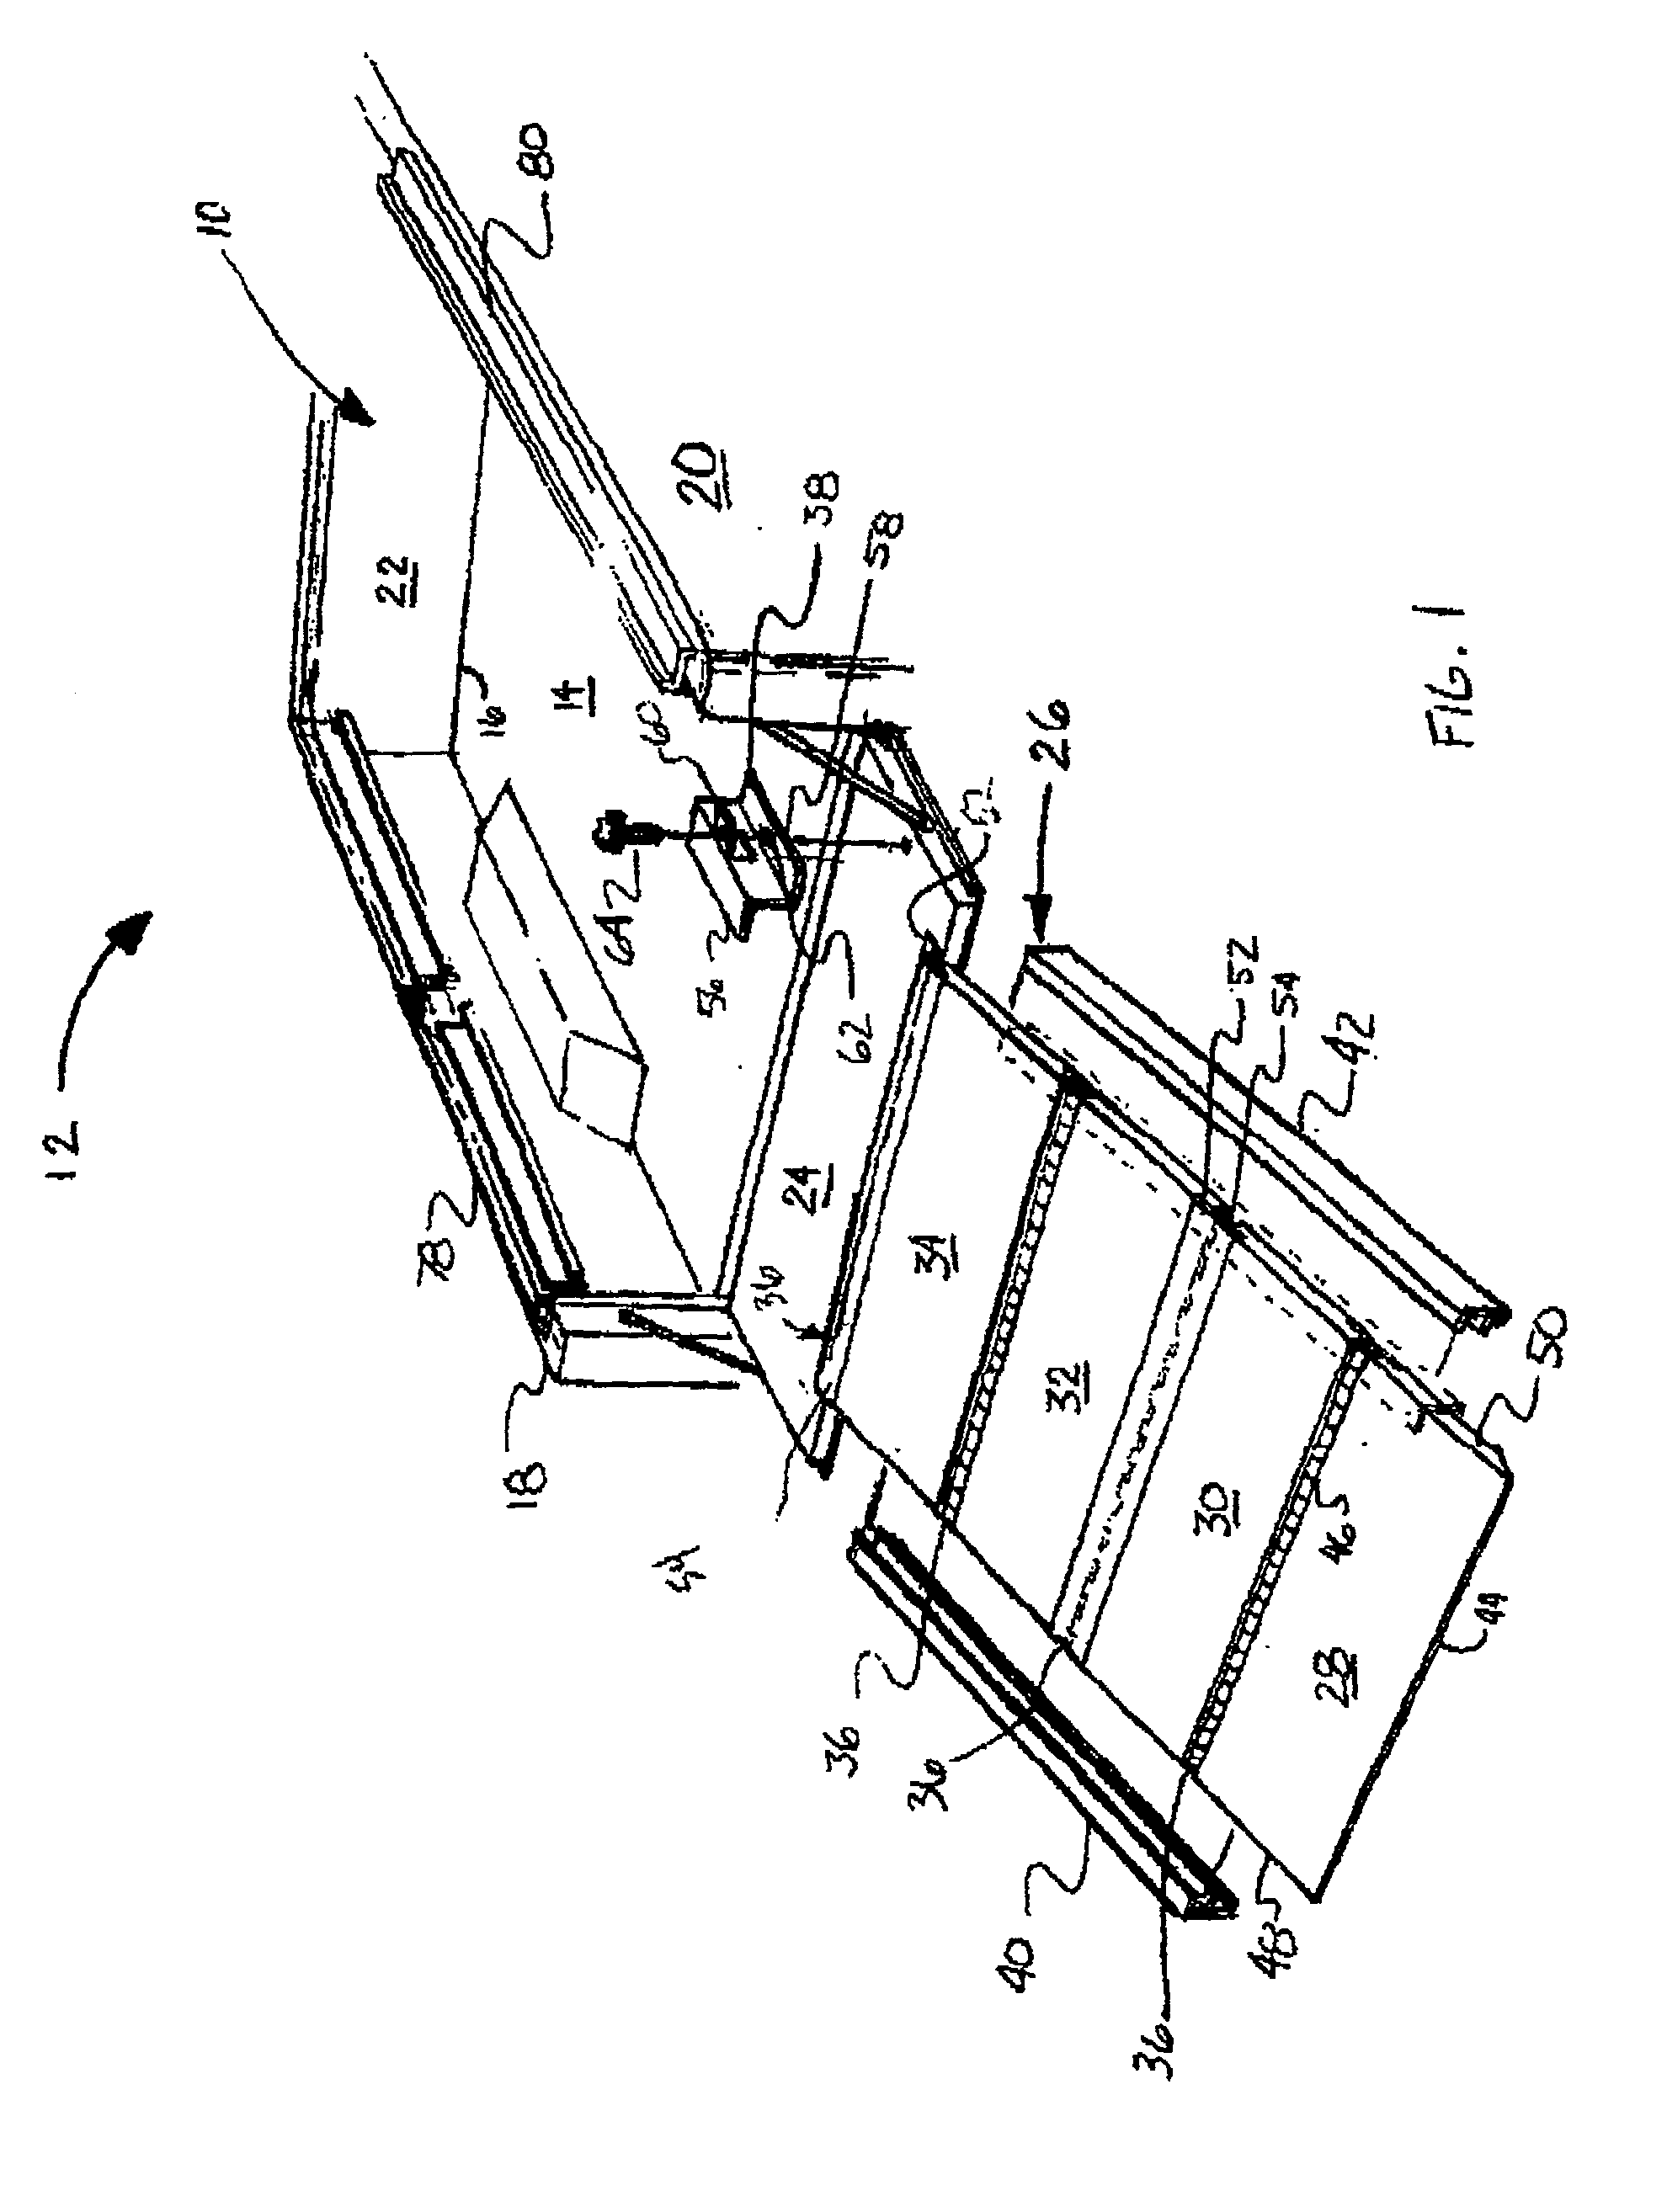 Automotive stowable ramp device